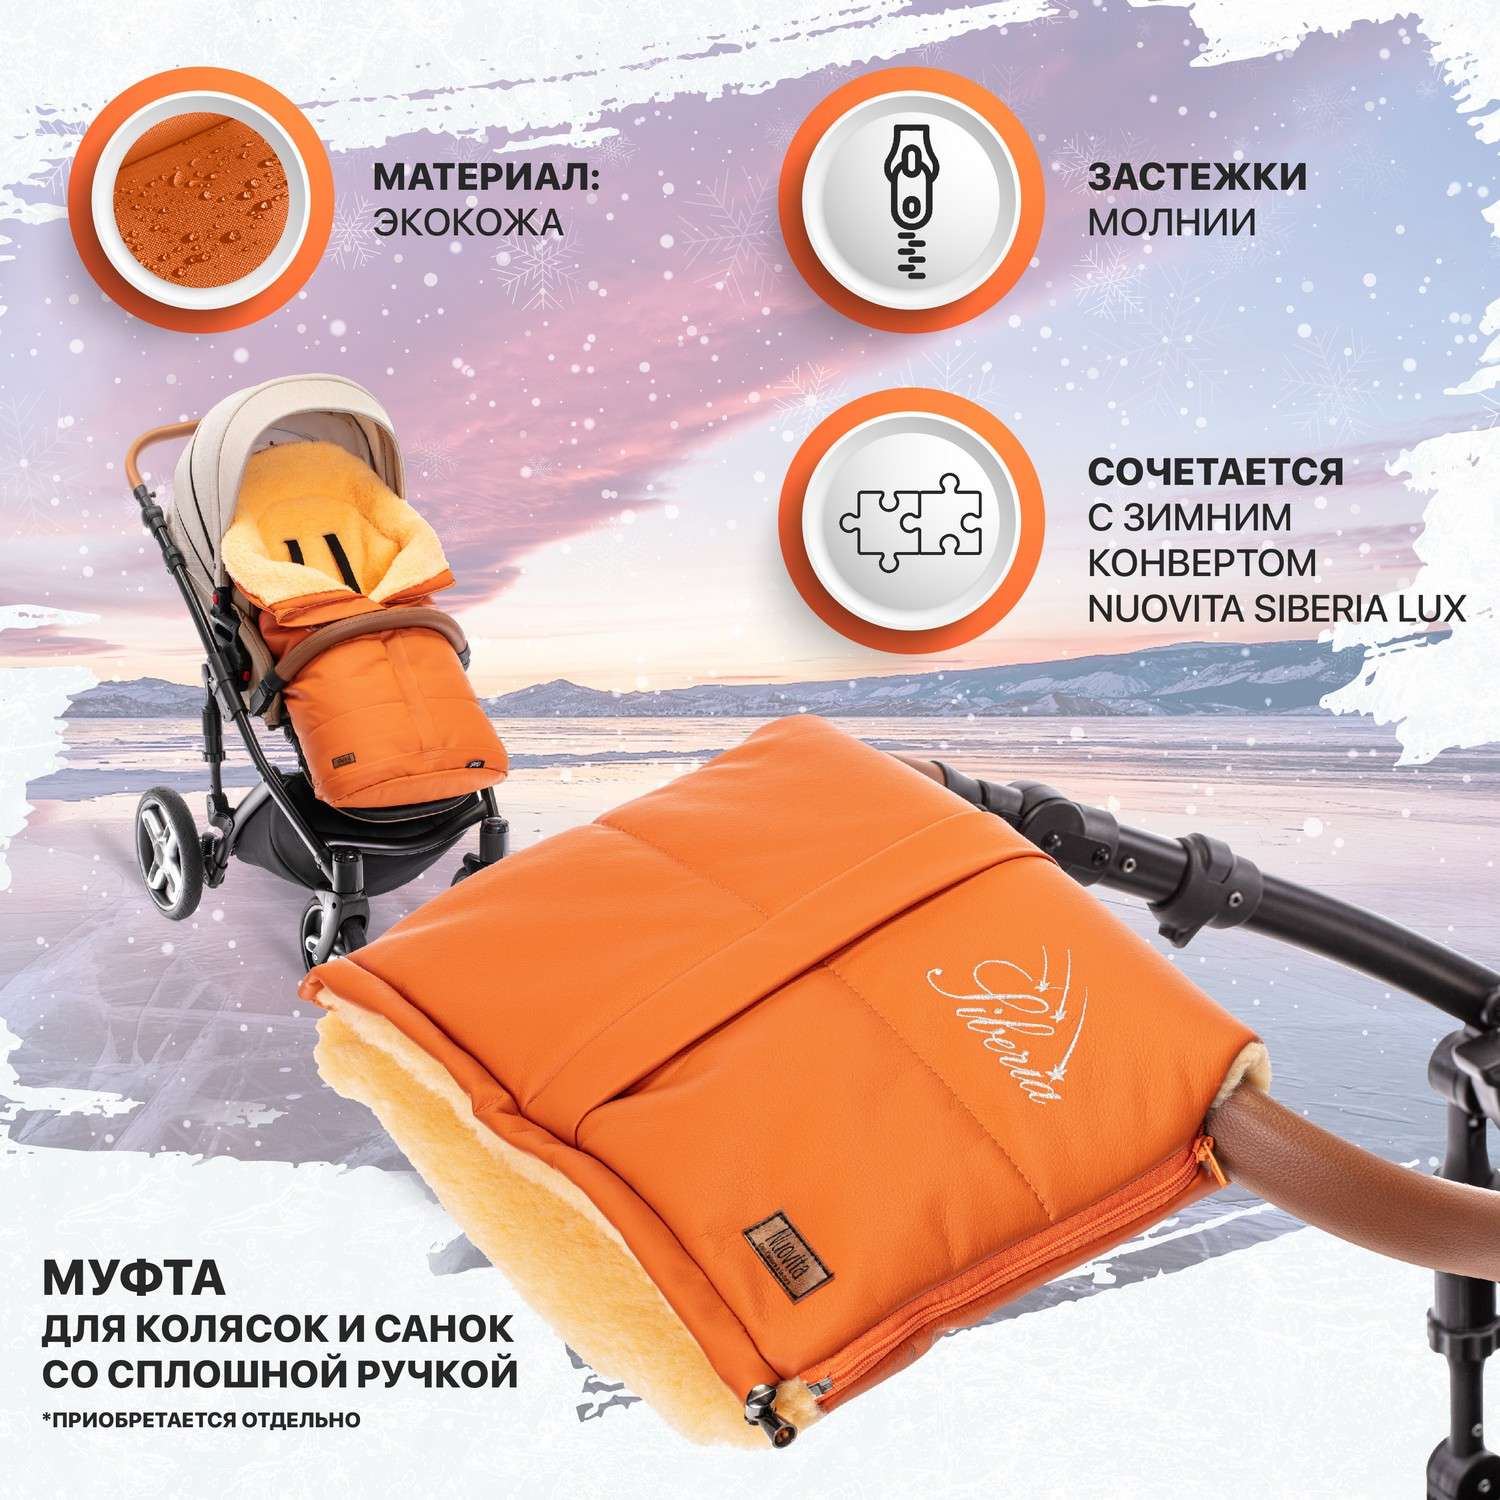 Конверт в коляску Nuovita Siberia Lux Pesco Оранжевый - фото 10